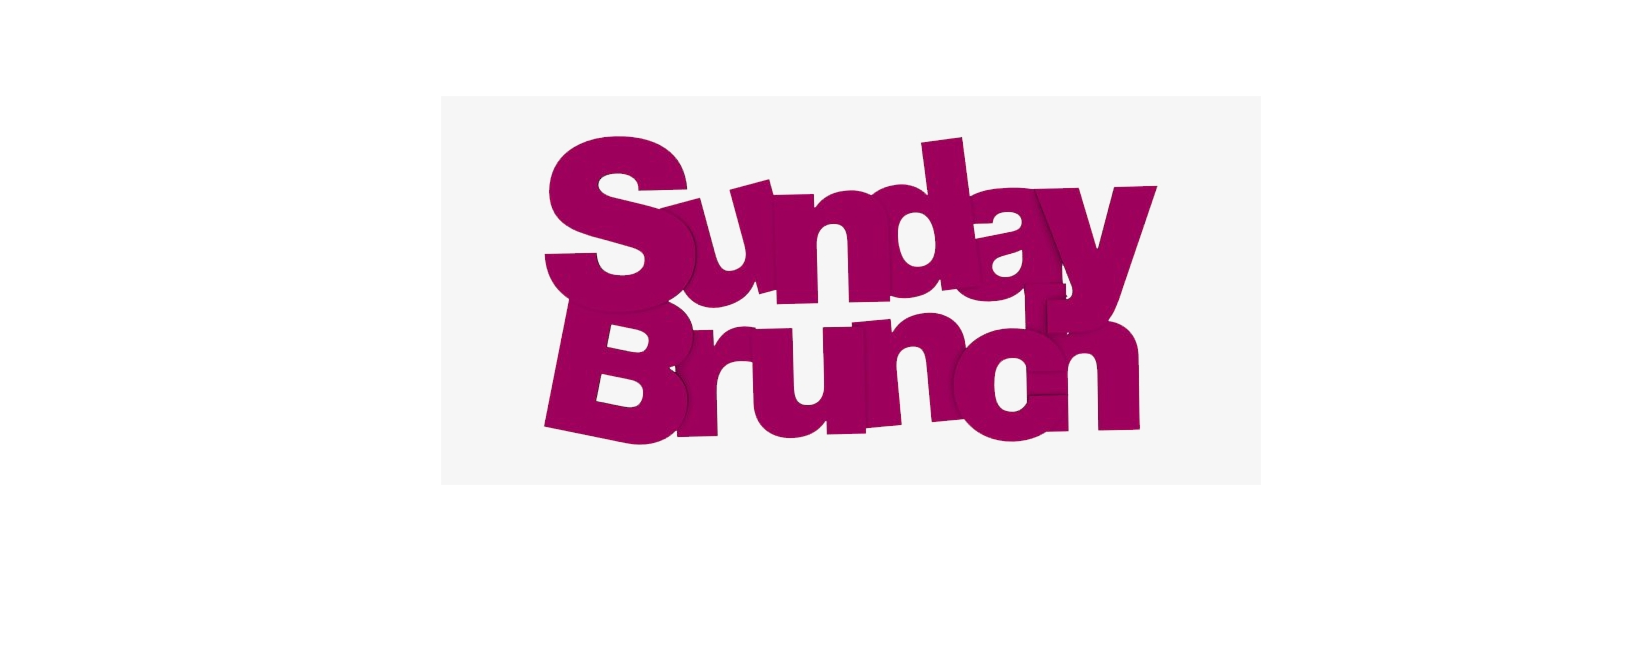 SundayBrunch Discount Code 2022